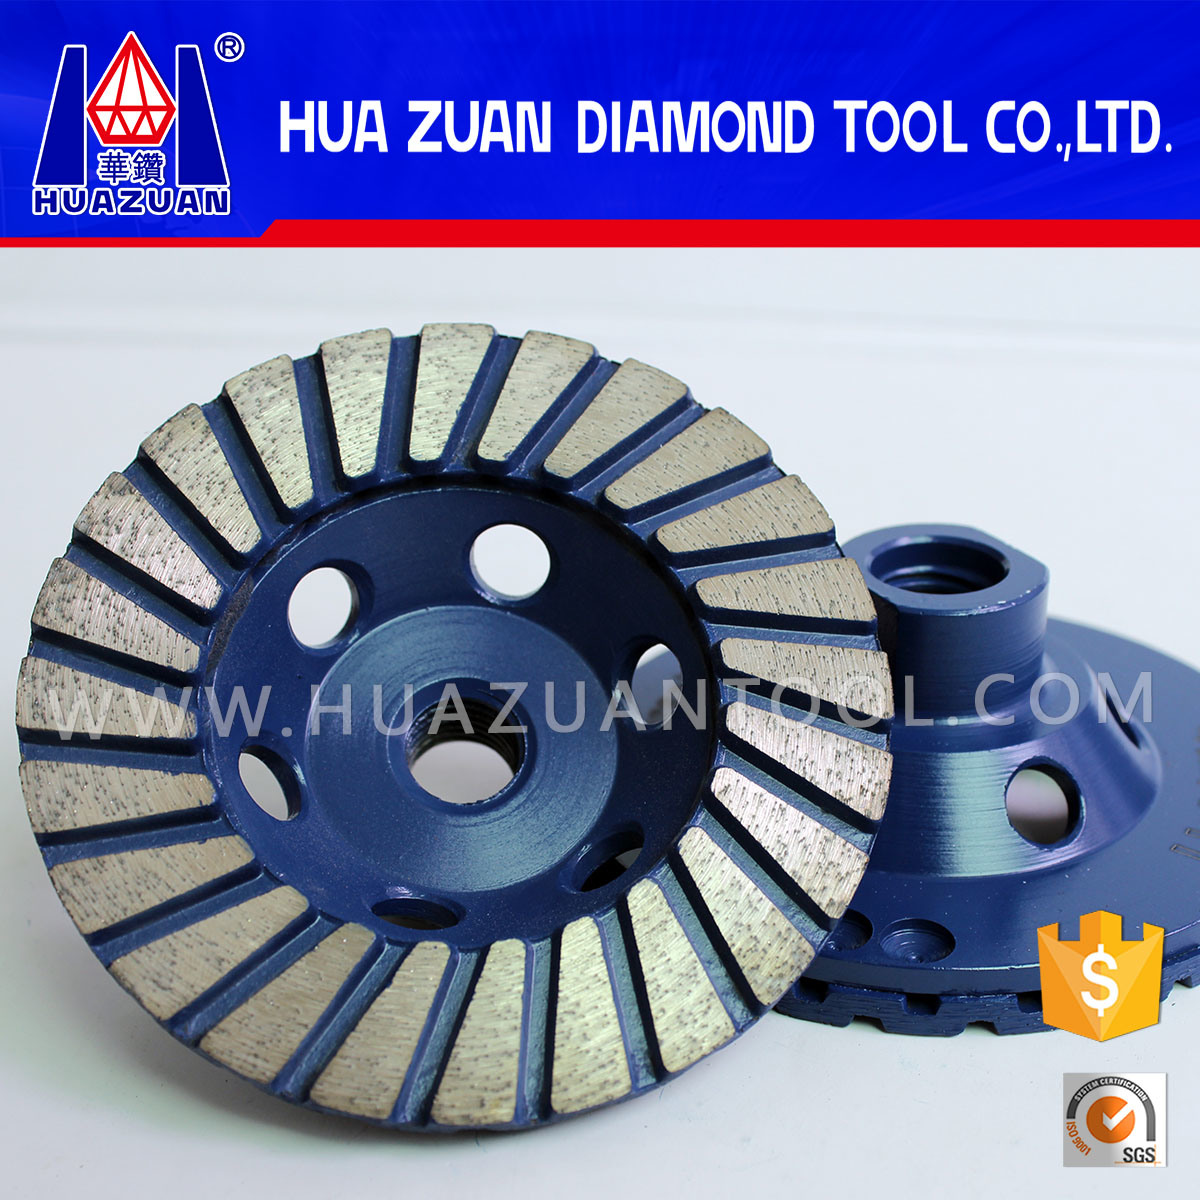 Huazuan 100 mm Turbo Cup Grinding Wheel Diamond Wheel